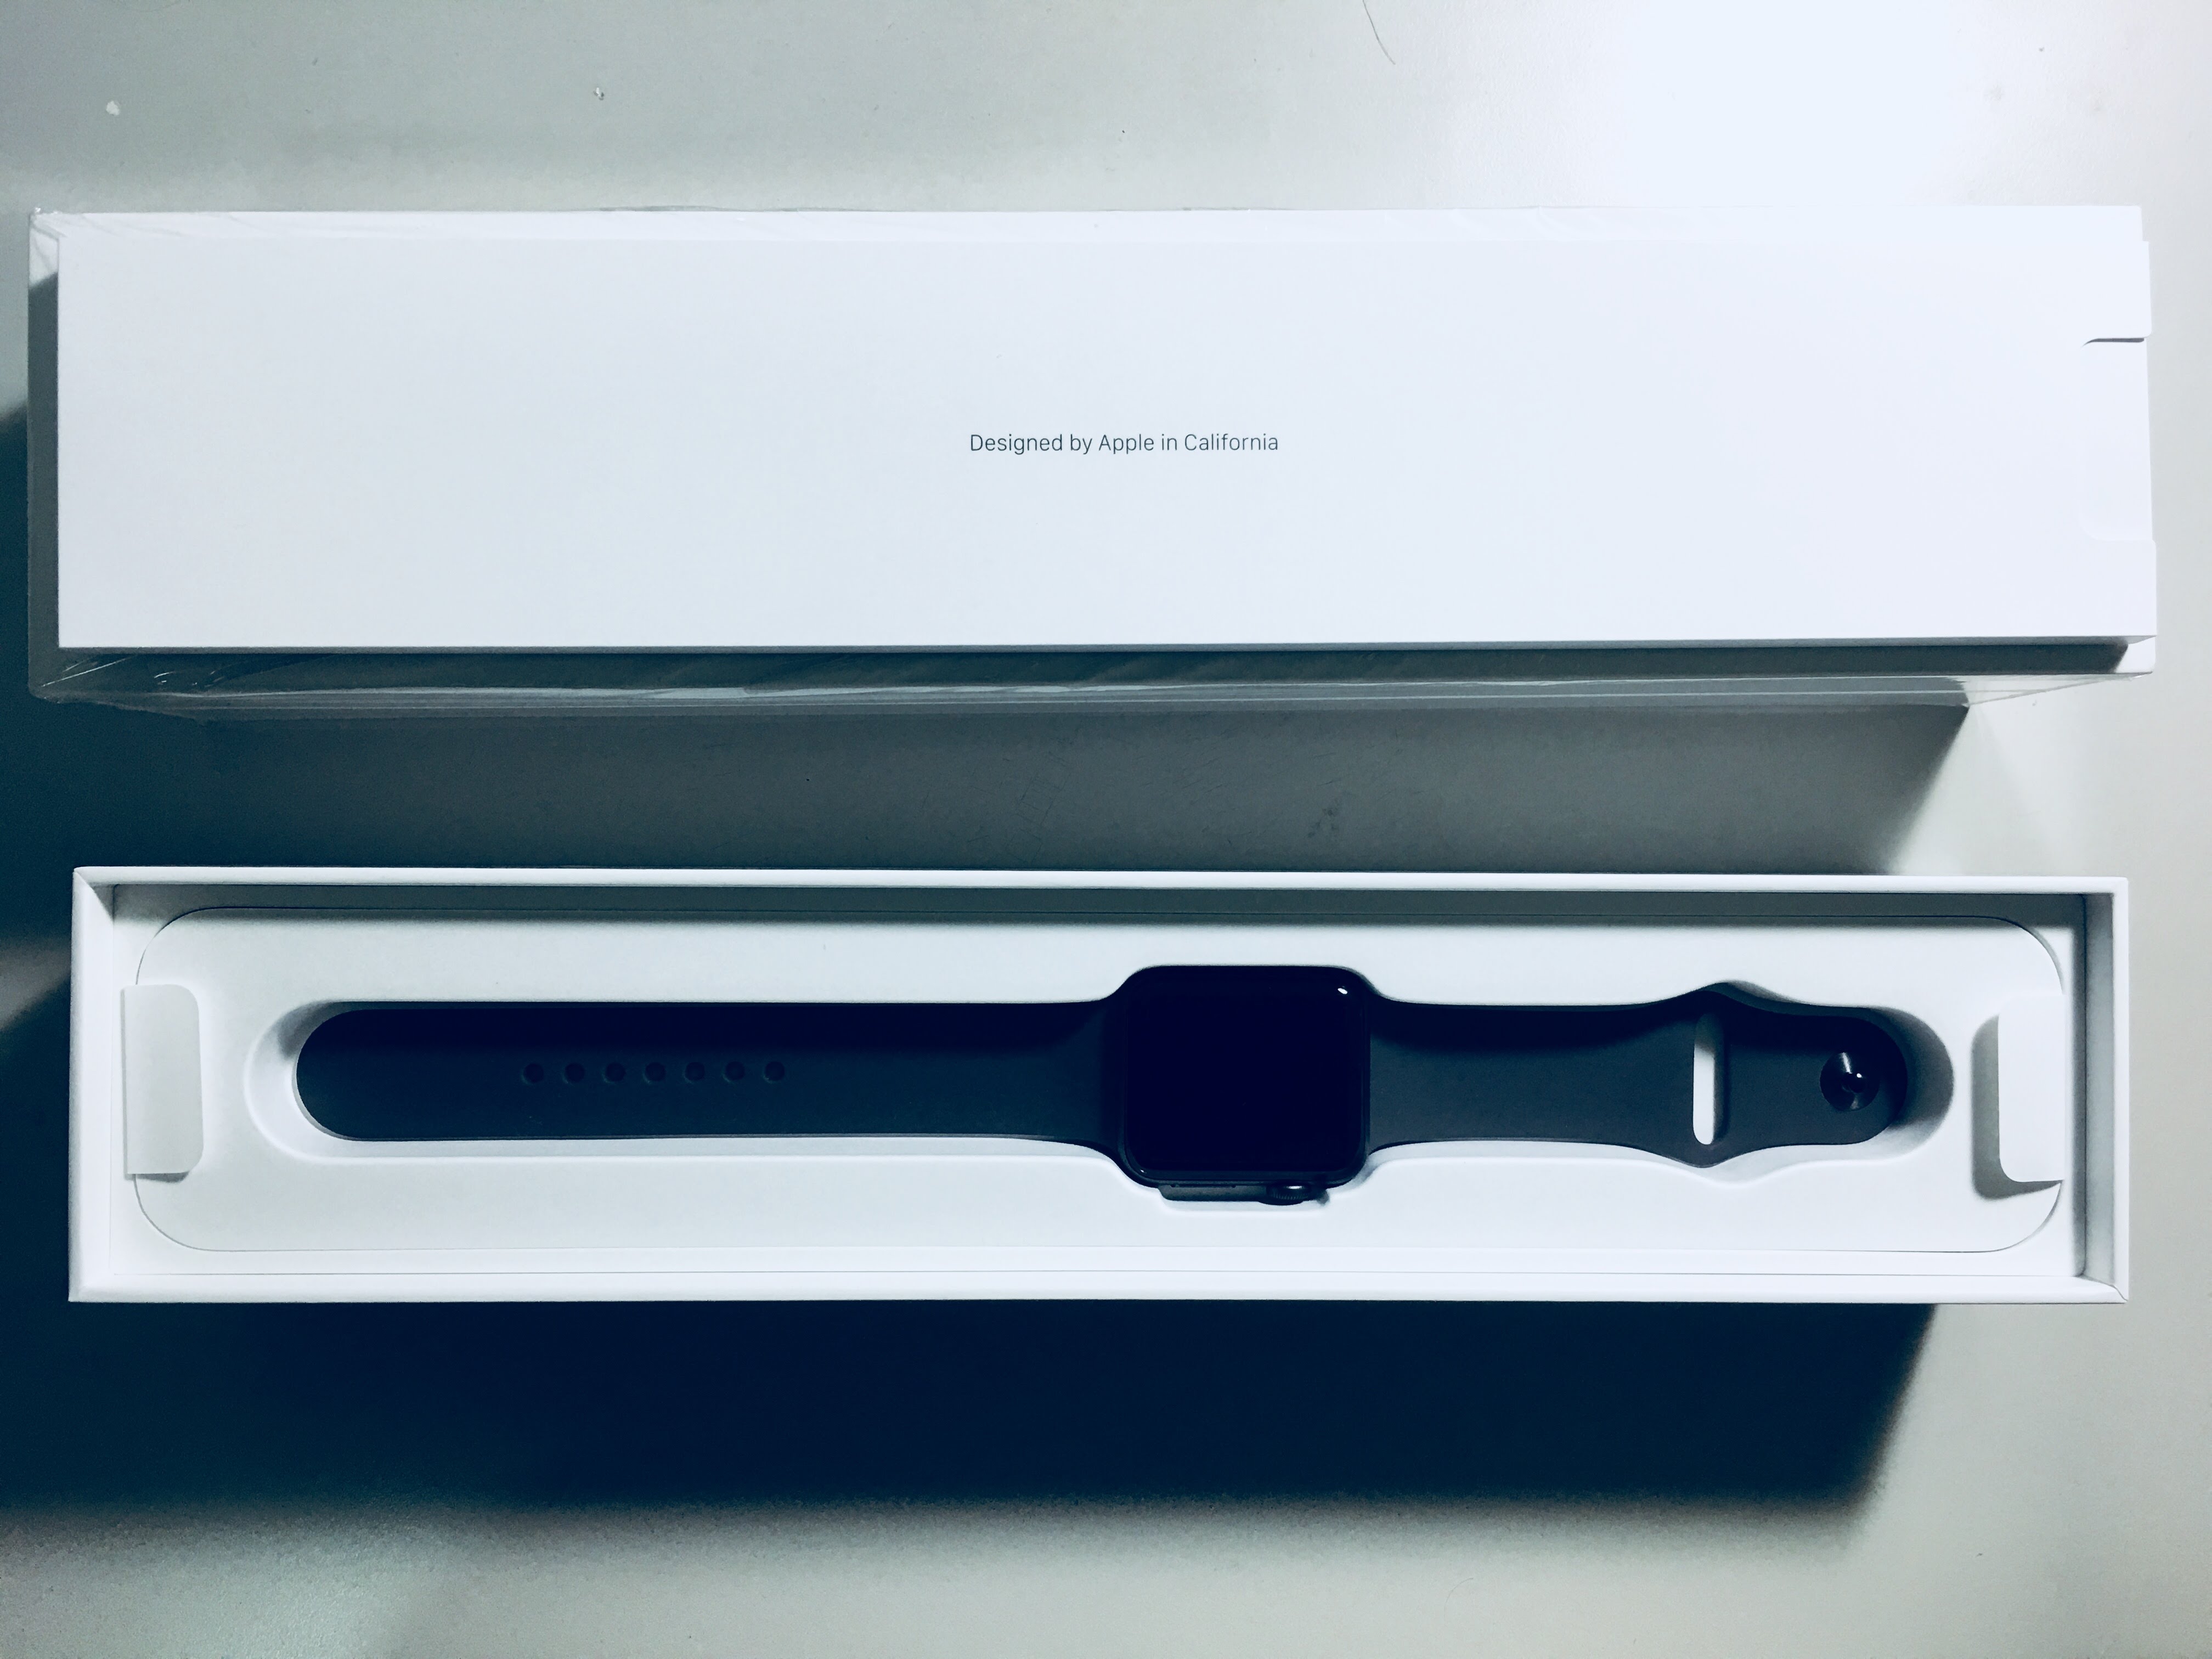 Apple Watch Series 3盒子